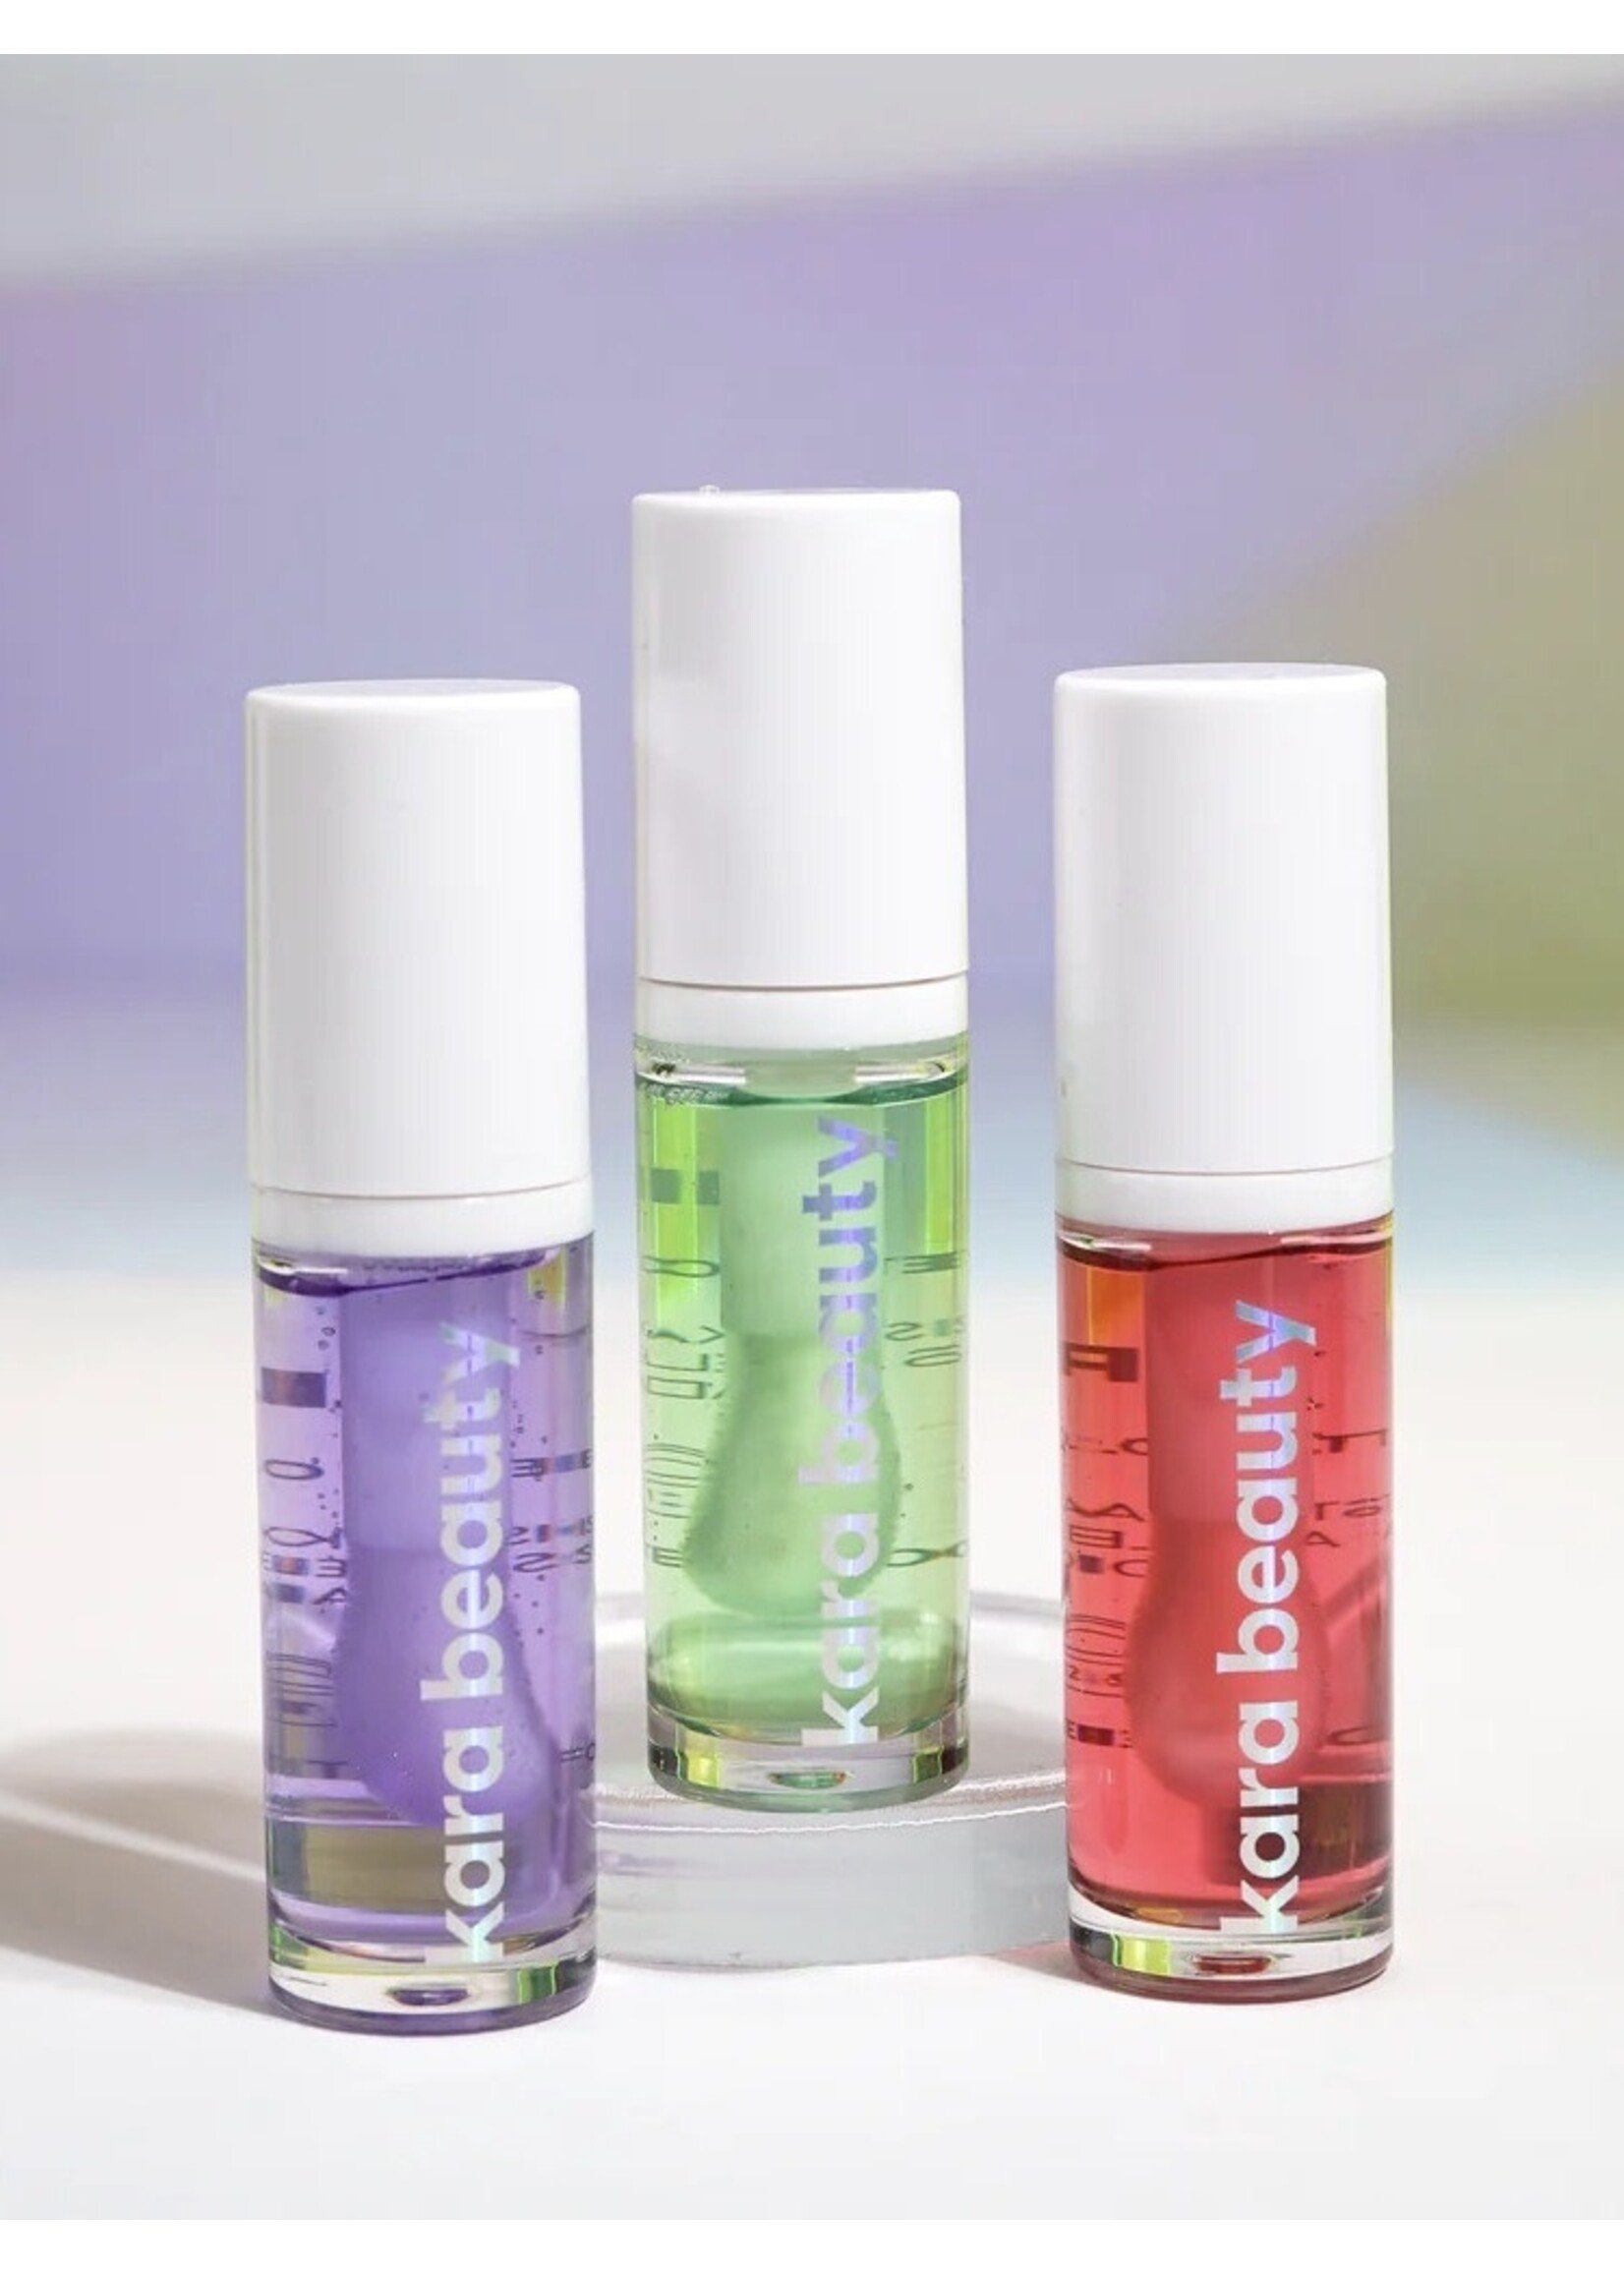 Kara Beauty Lip oil set of 3 "Essentials" by Kara Beauty